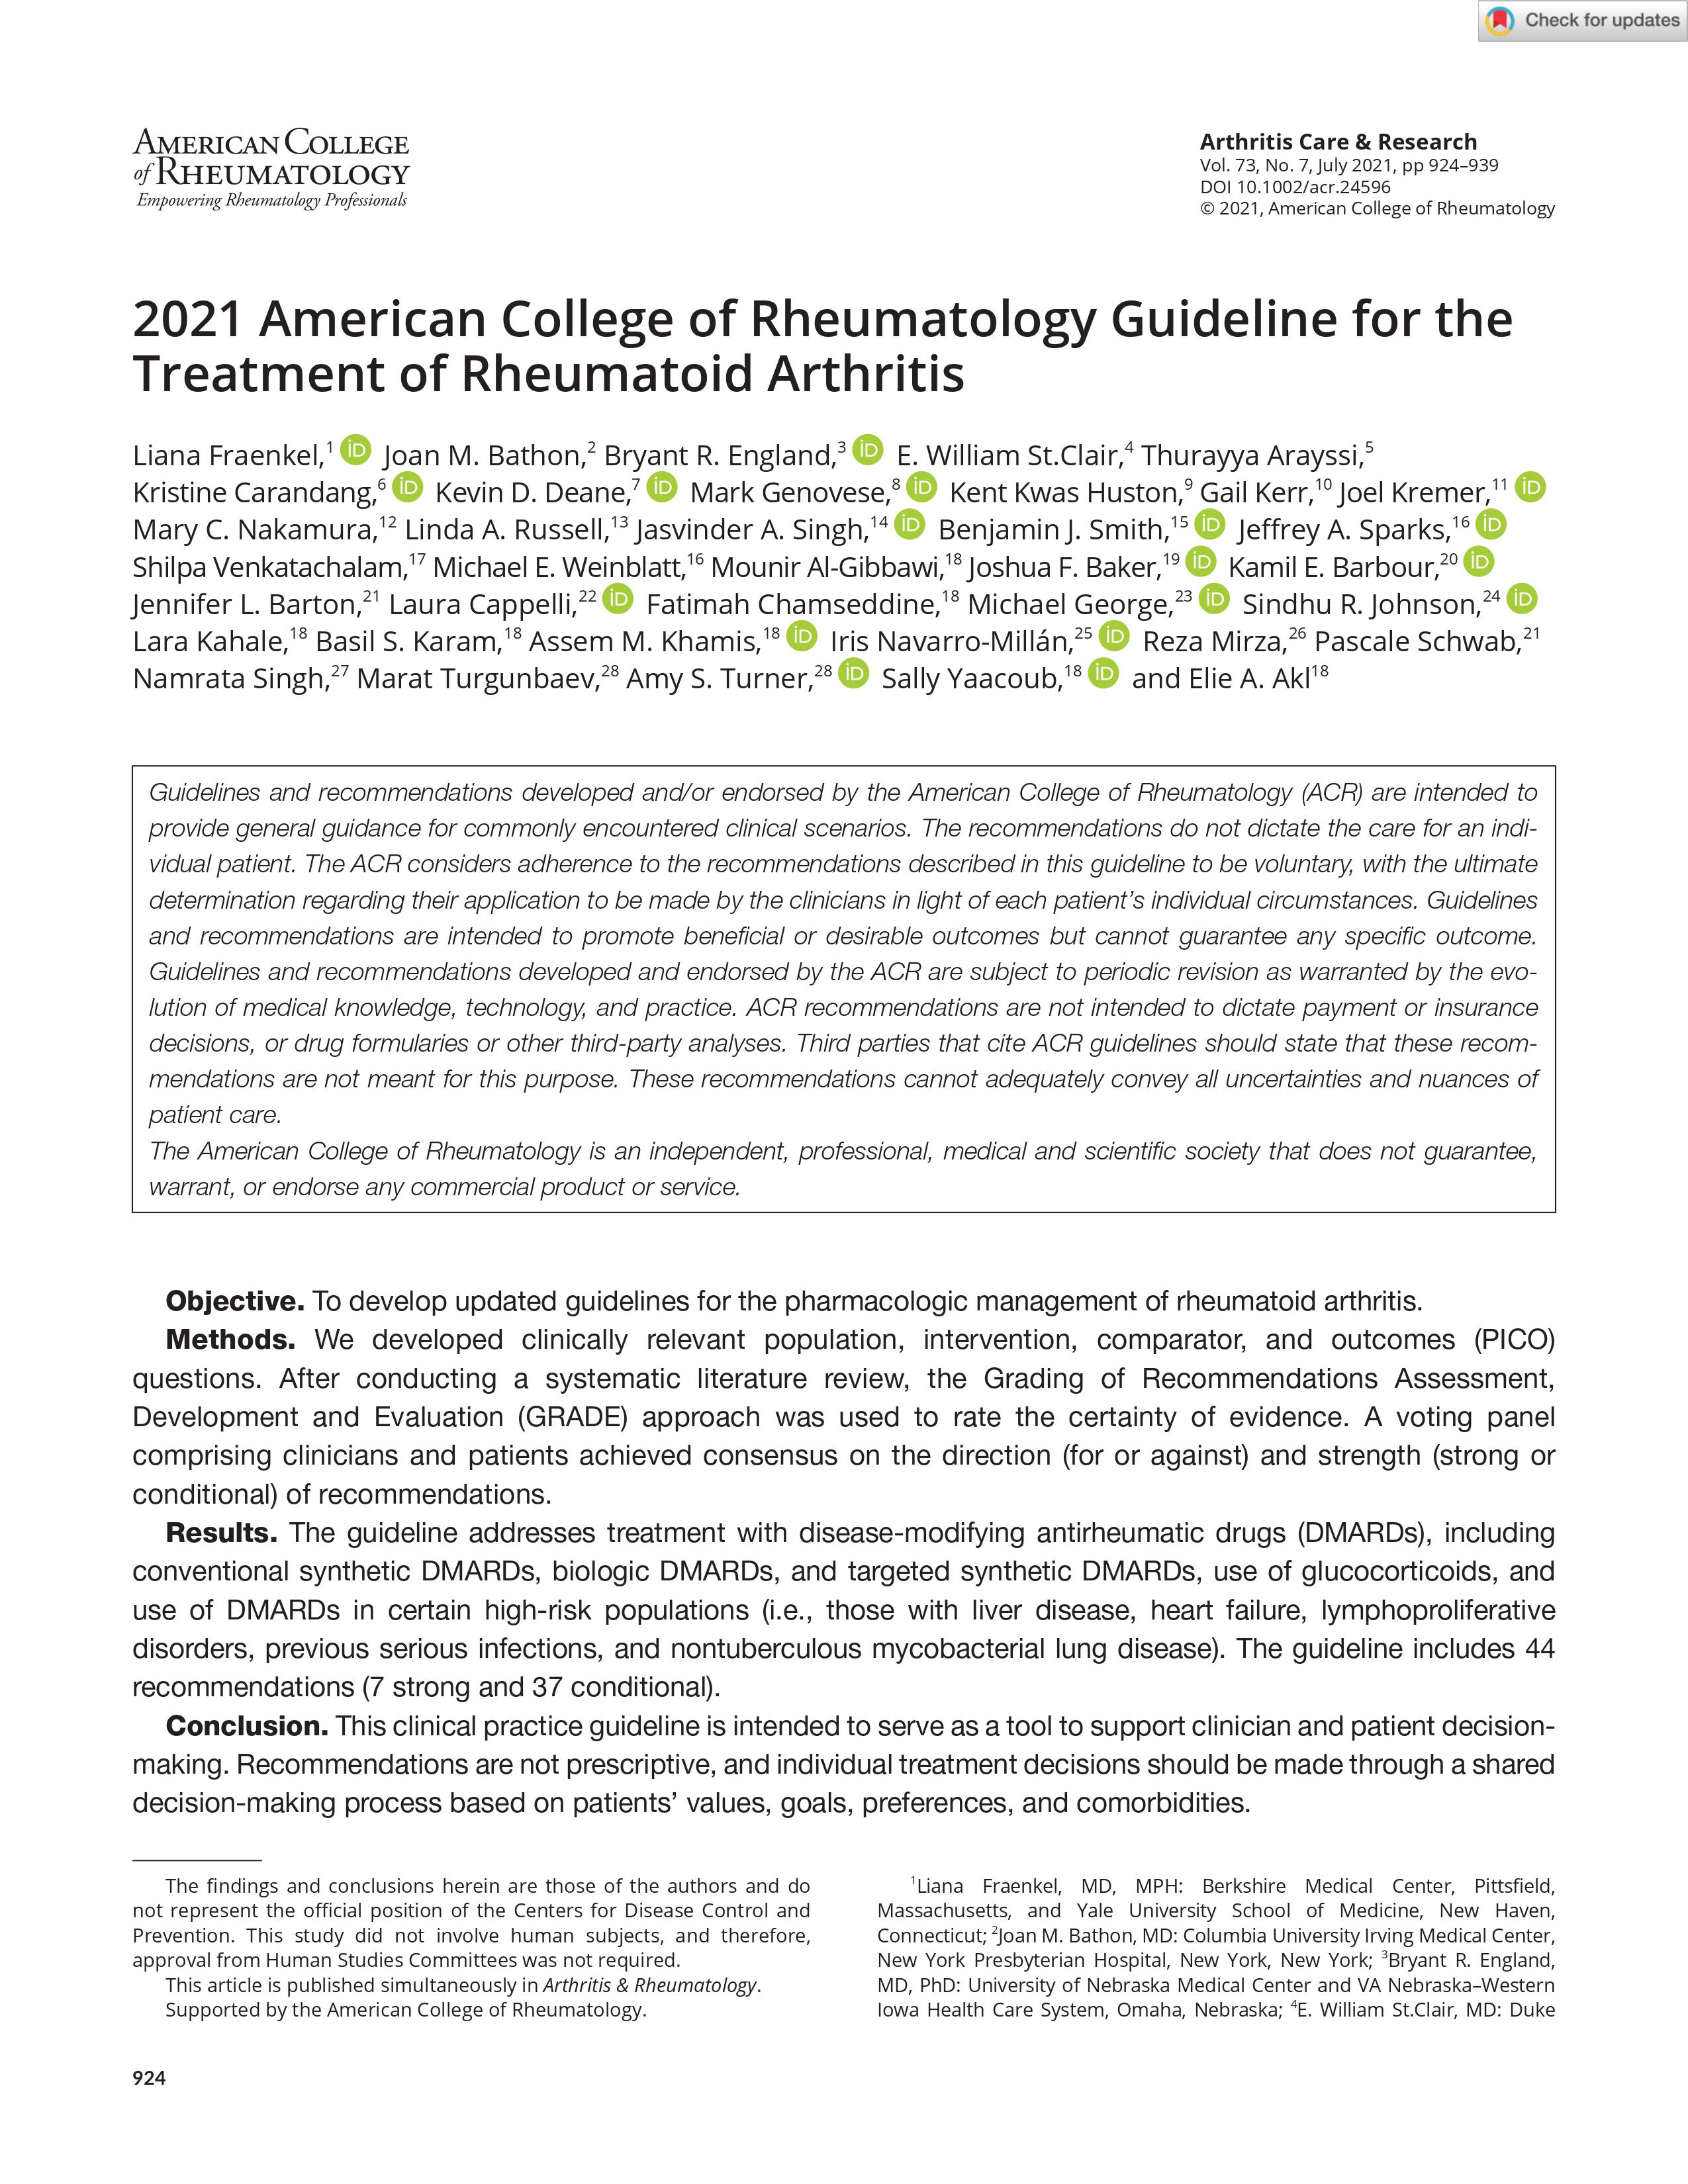 2021 American College of Rheumatology Guideline for the Treatment of Rheumatoid Arthritis (ACR 2021)